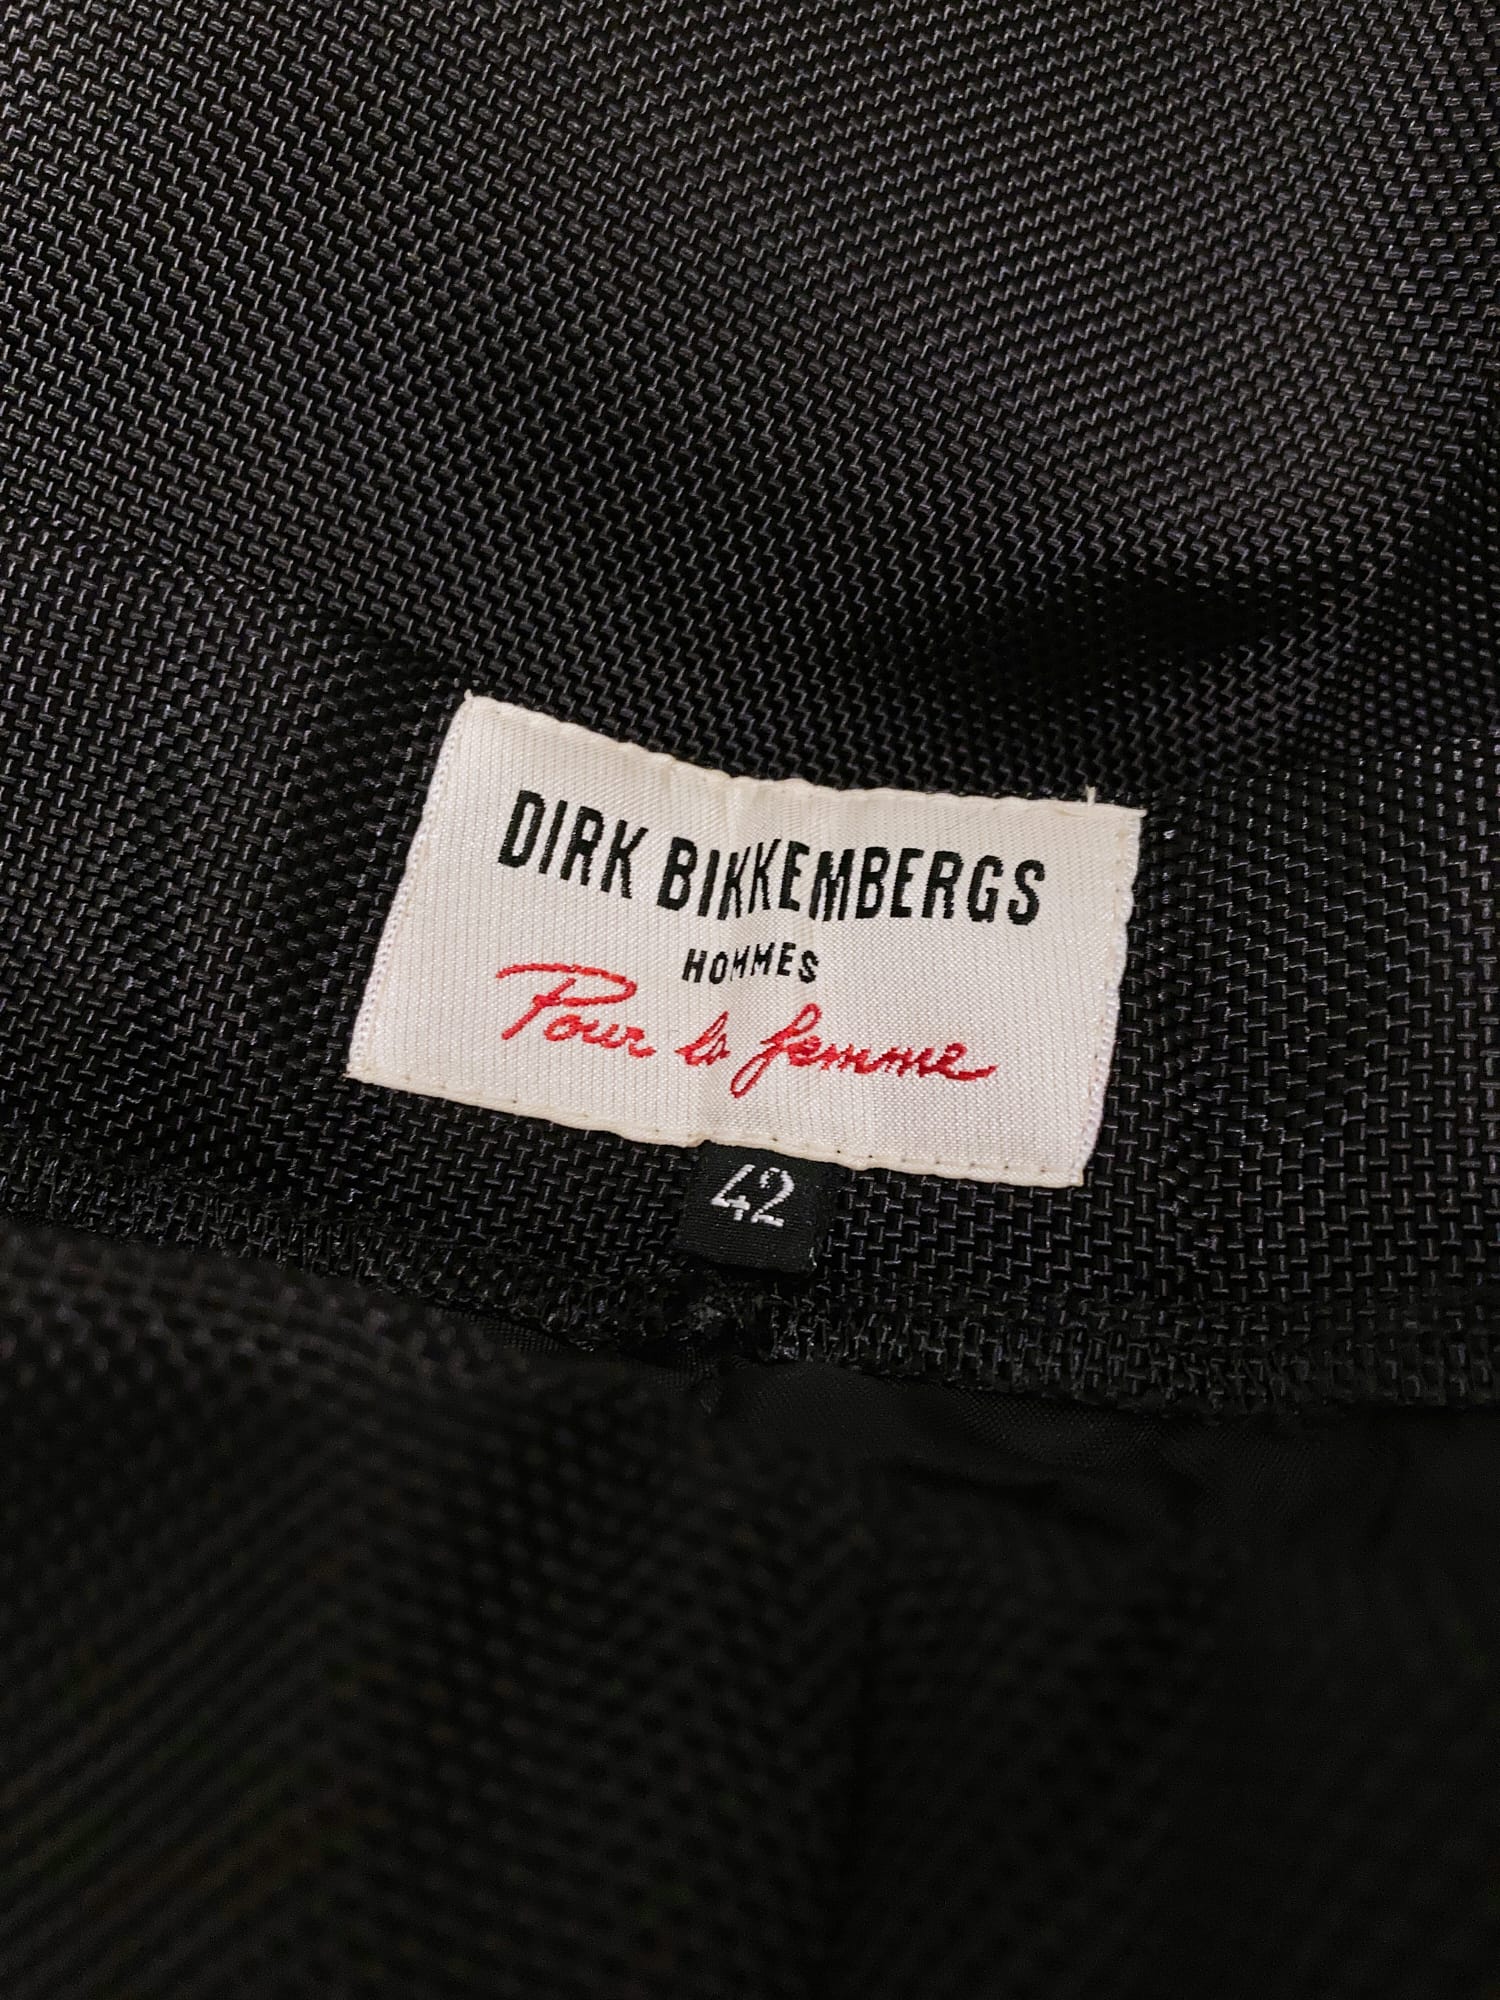 Dirk Bikkembergs Hommes Pour La Femme 90s black ballistic nylon pleated trousers